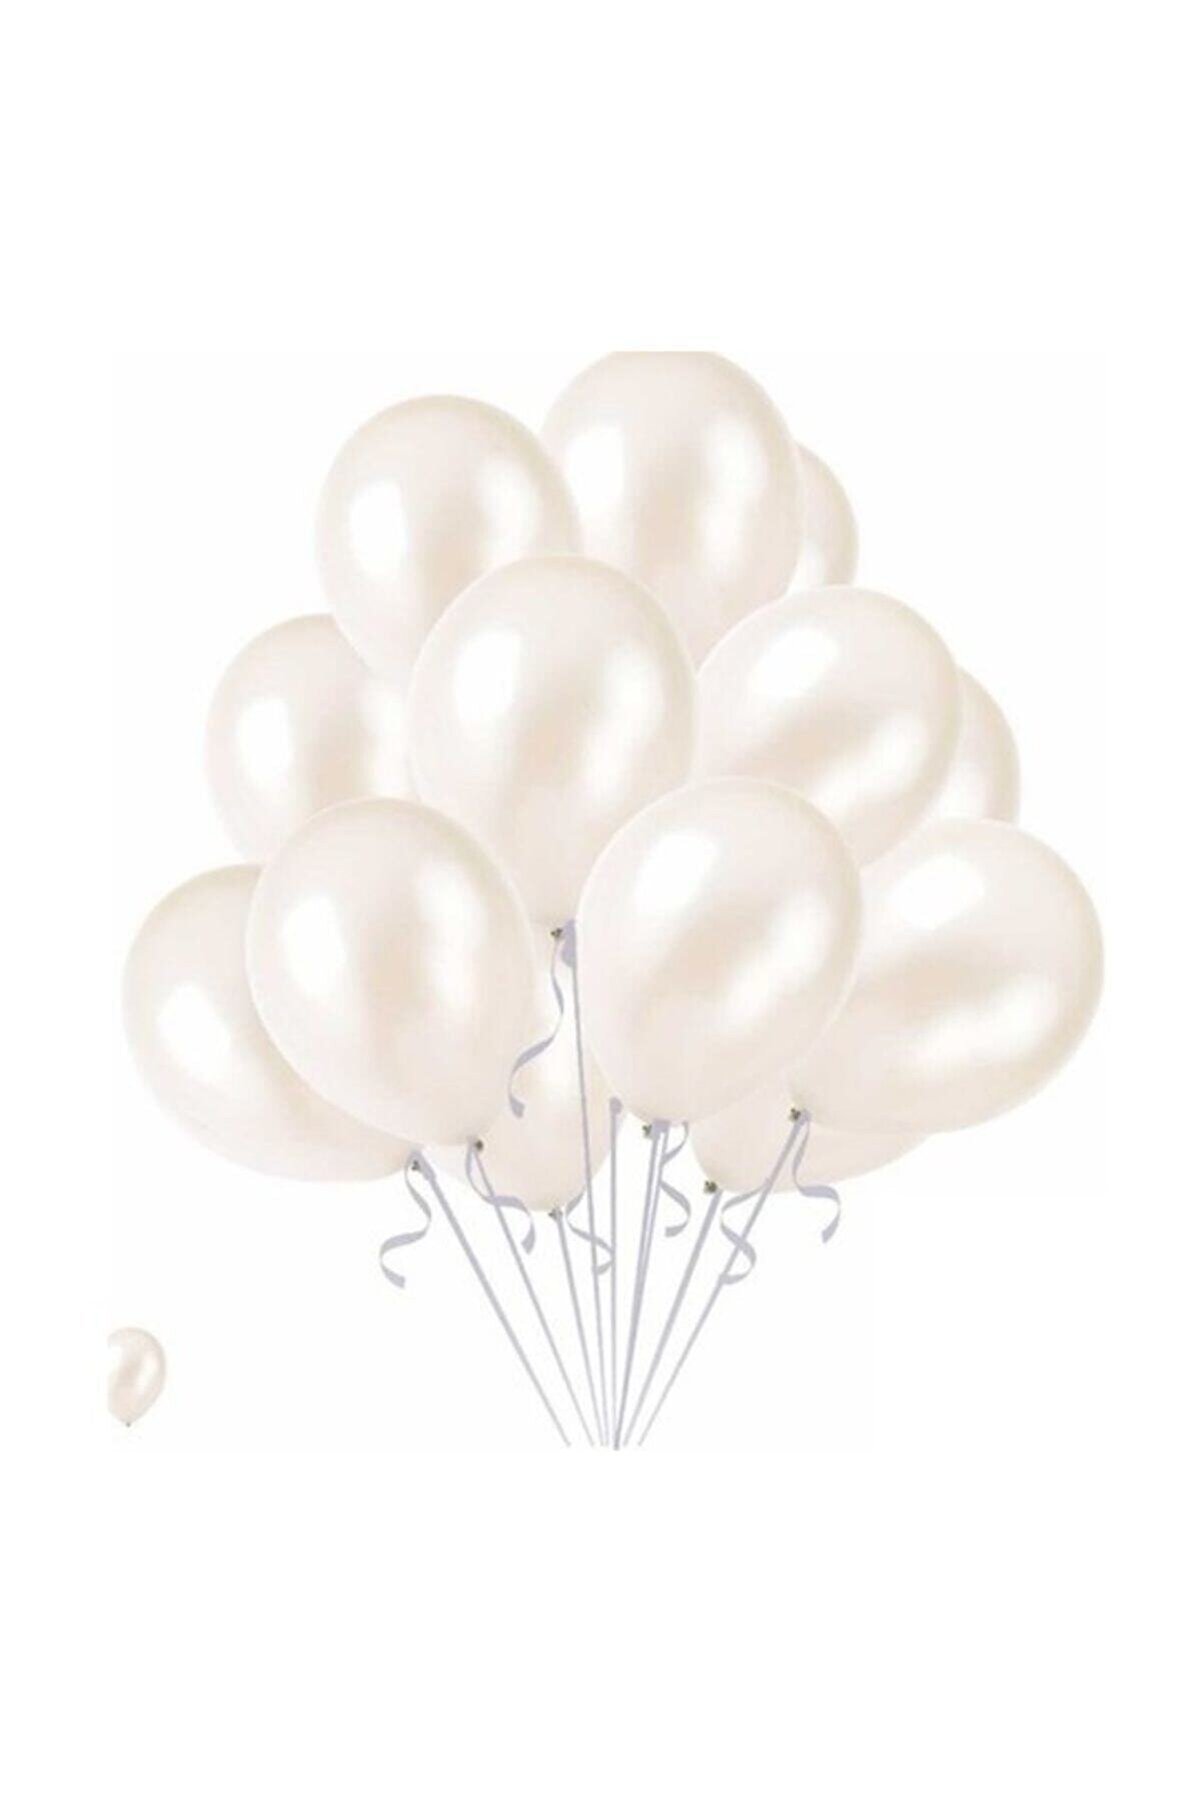 Cansüs Beyaz Metalik Balon 10'lu